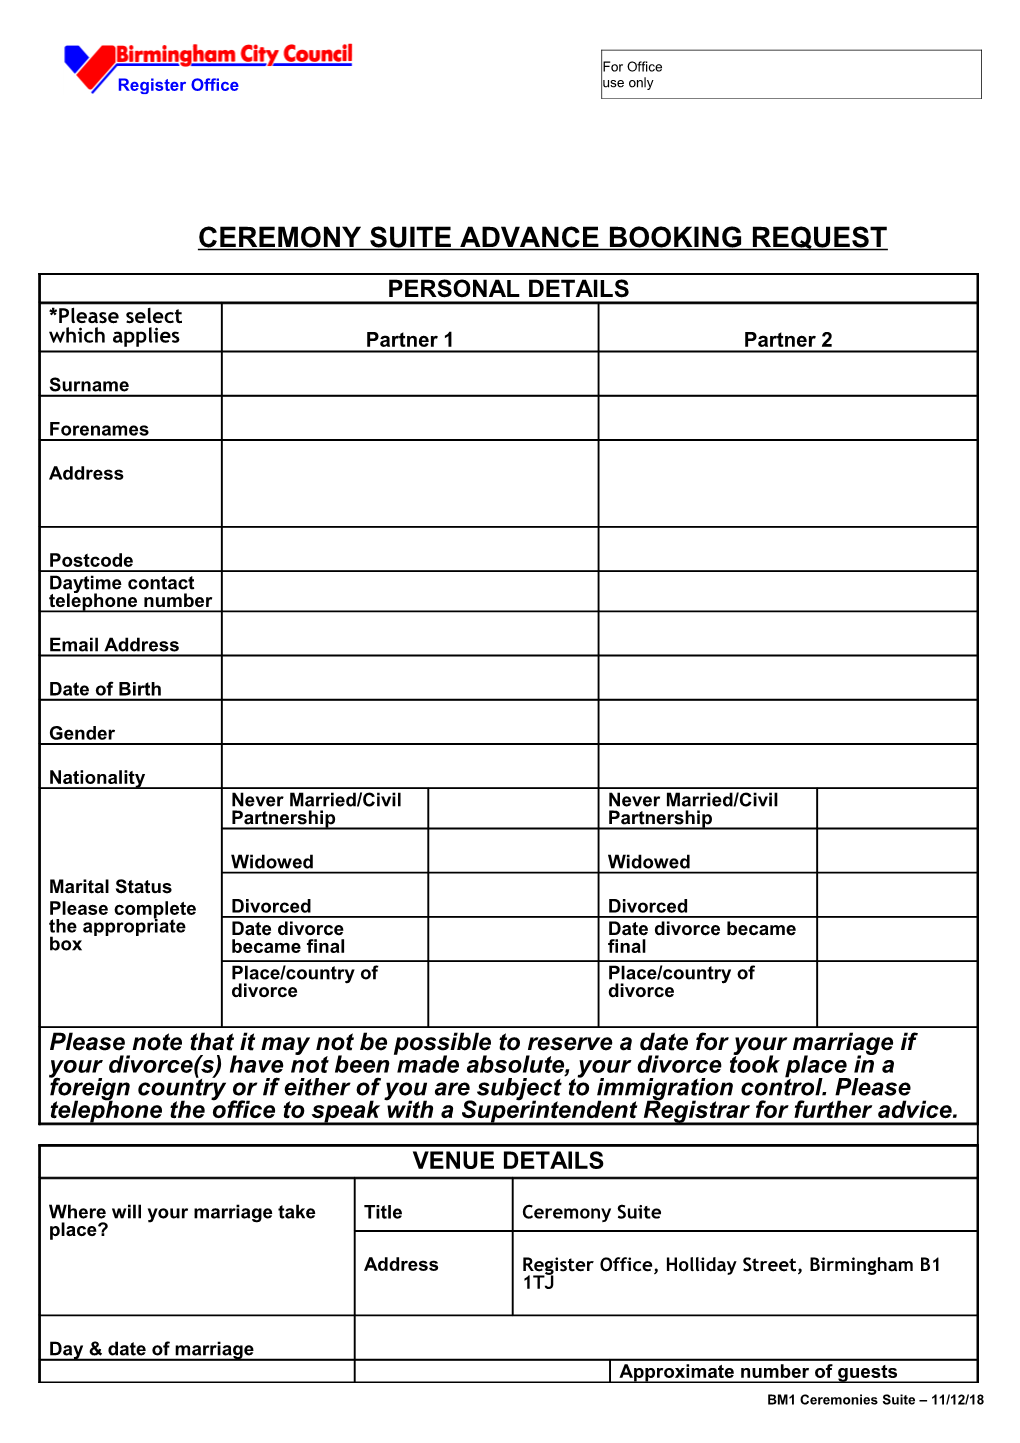 Ceremony Suite Advance Booking Request